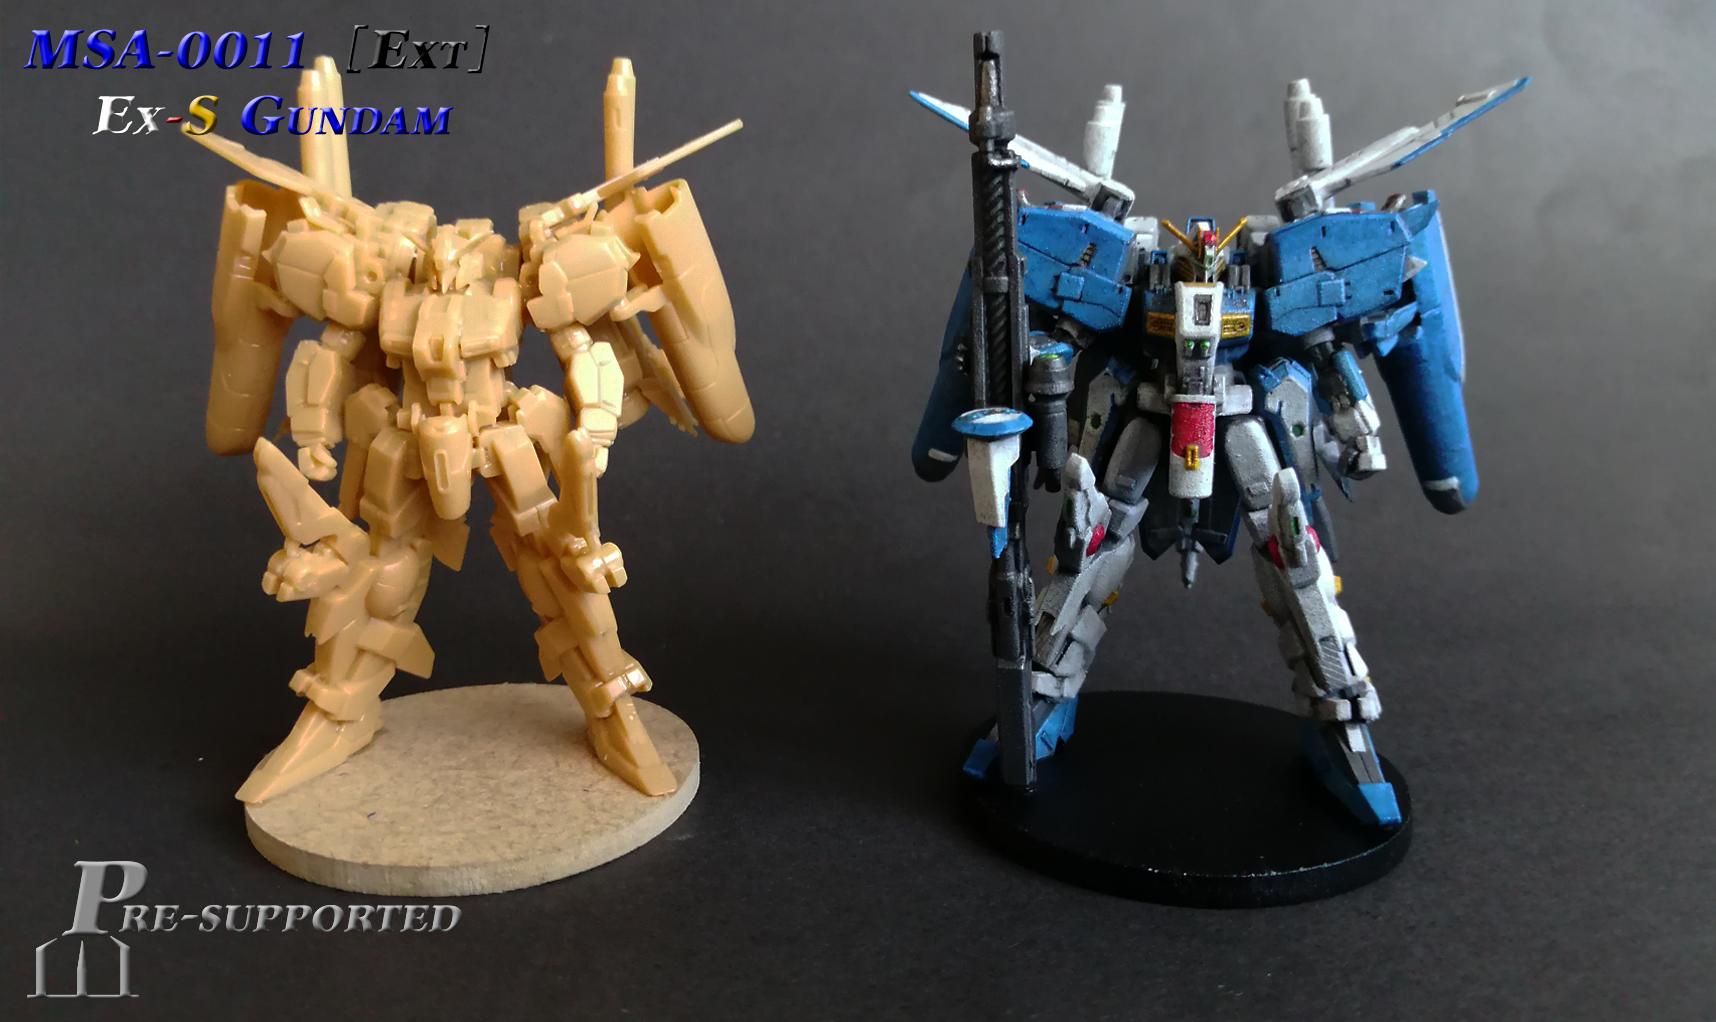 MSA-0011 [Ext] Ex-S Gundam [Artifact Scale] [Free] 3d model